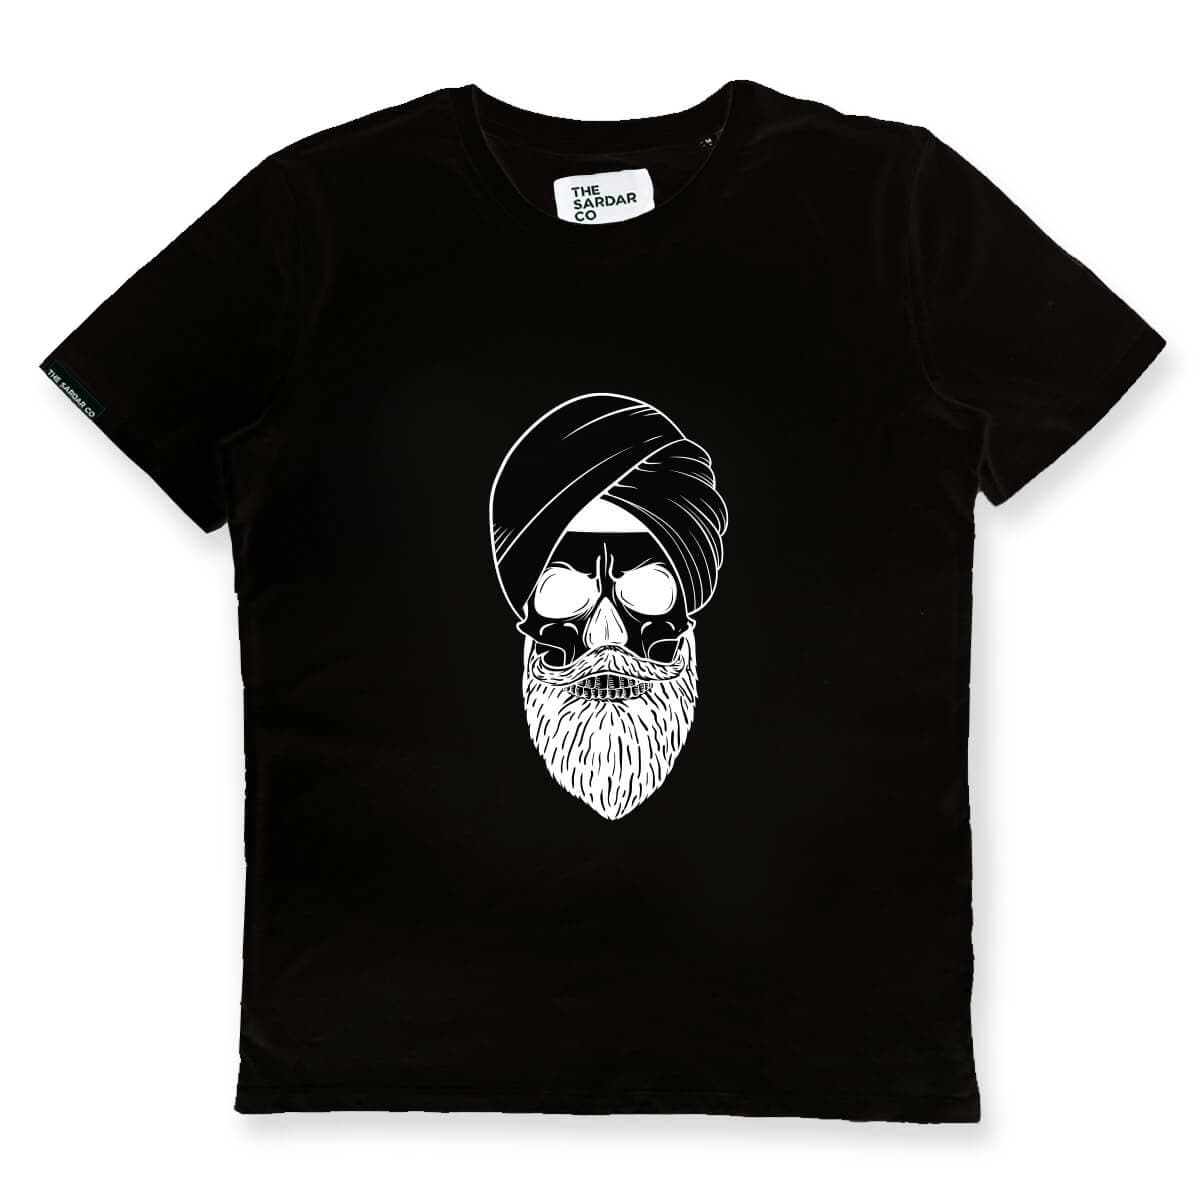 Skull Singh Premium Fit Men's T-shirt in black